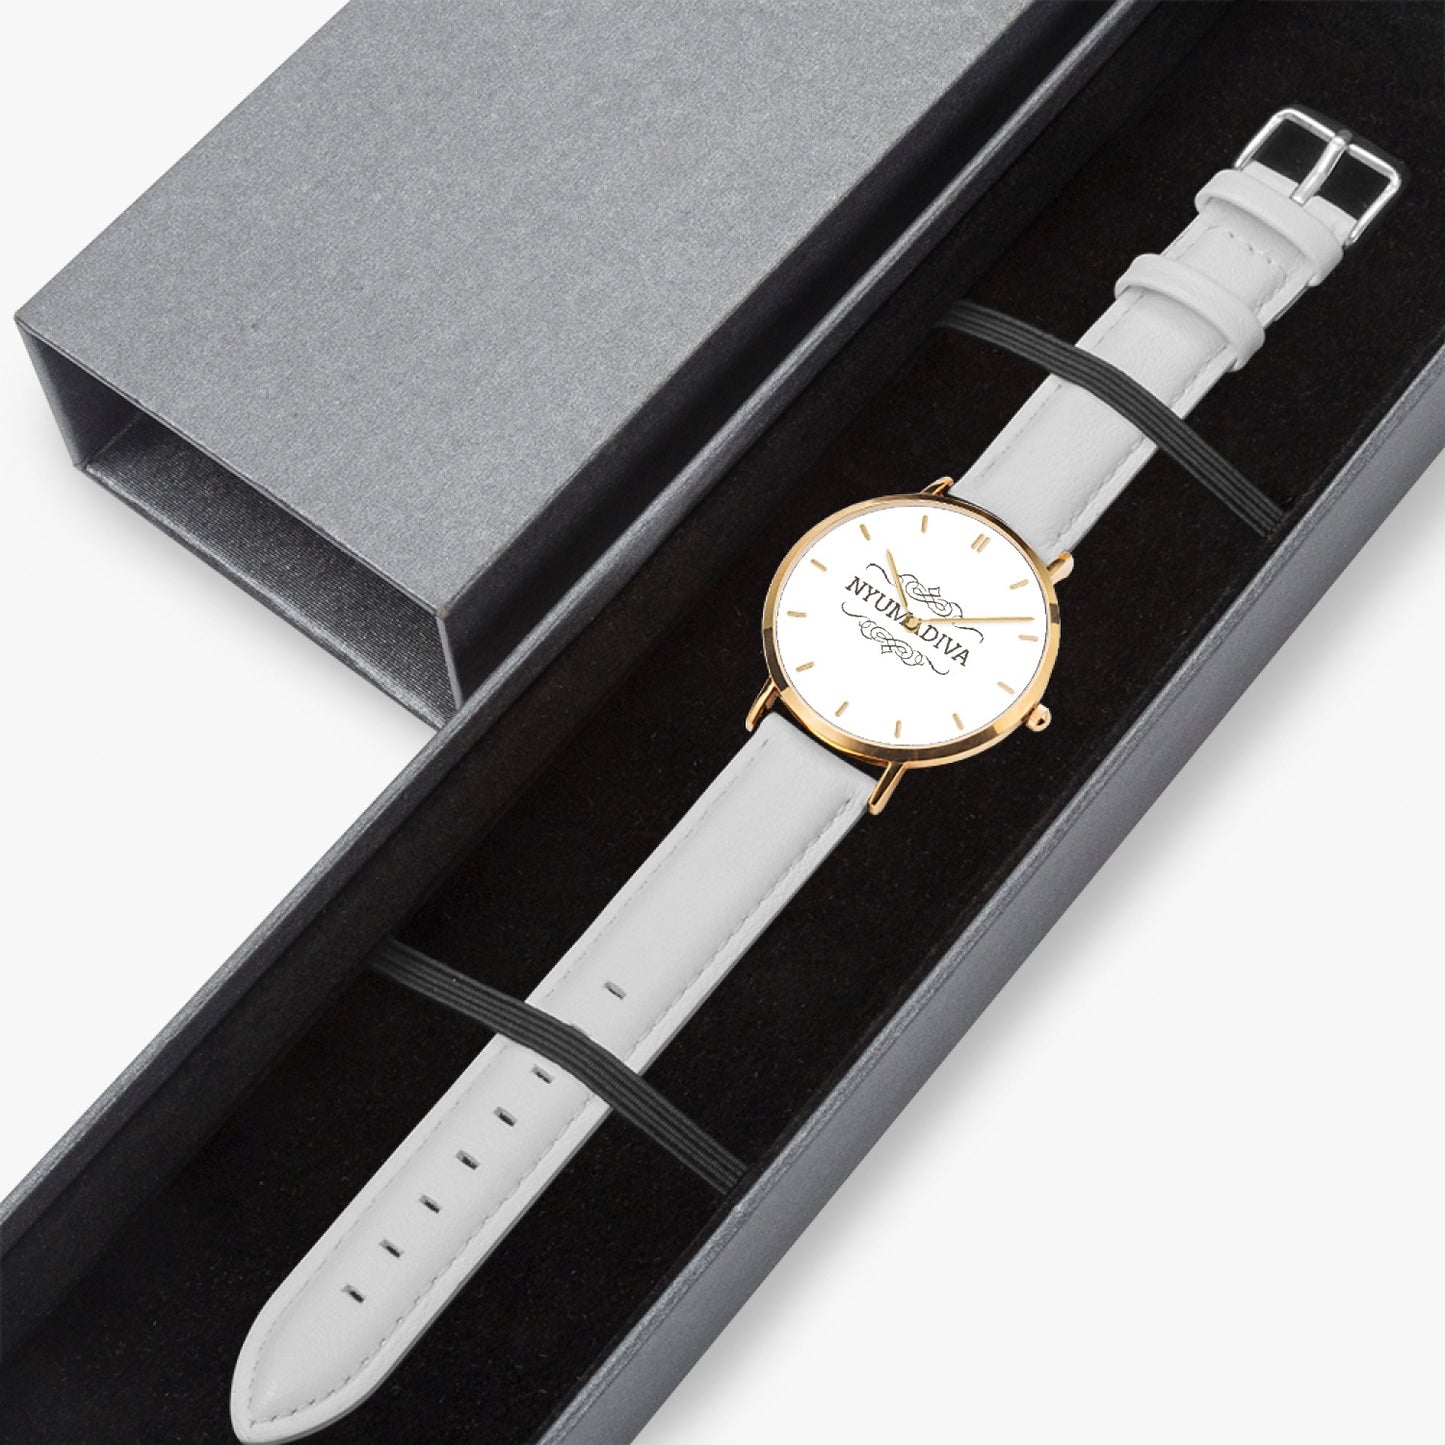 Nyumadiva Ultra-Thin Leather Strap Quartz Watch